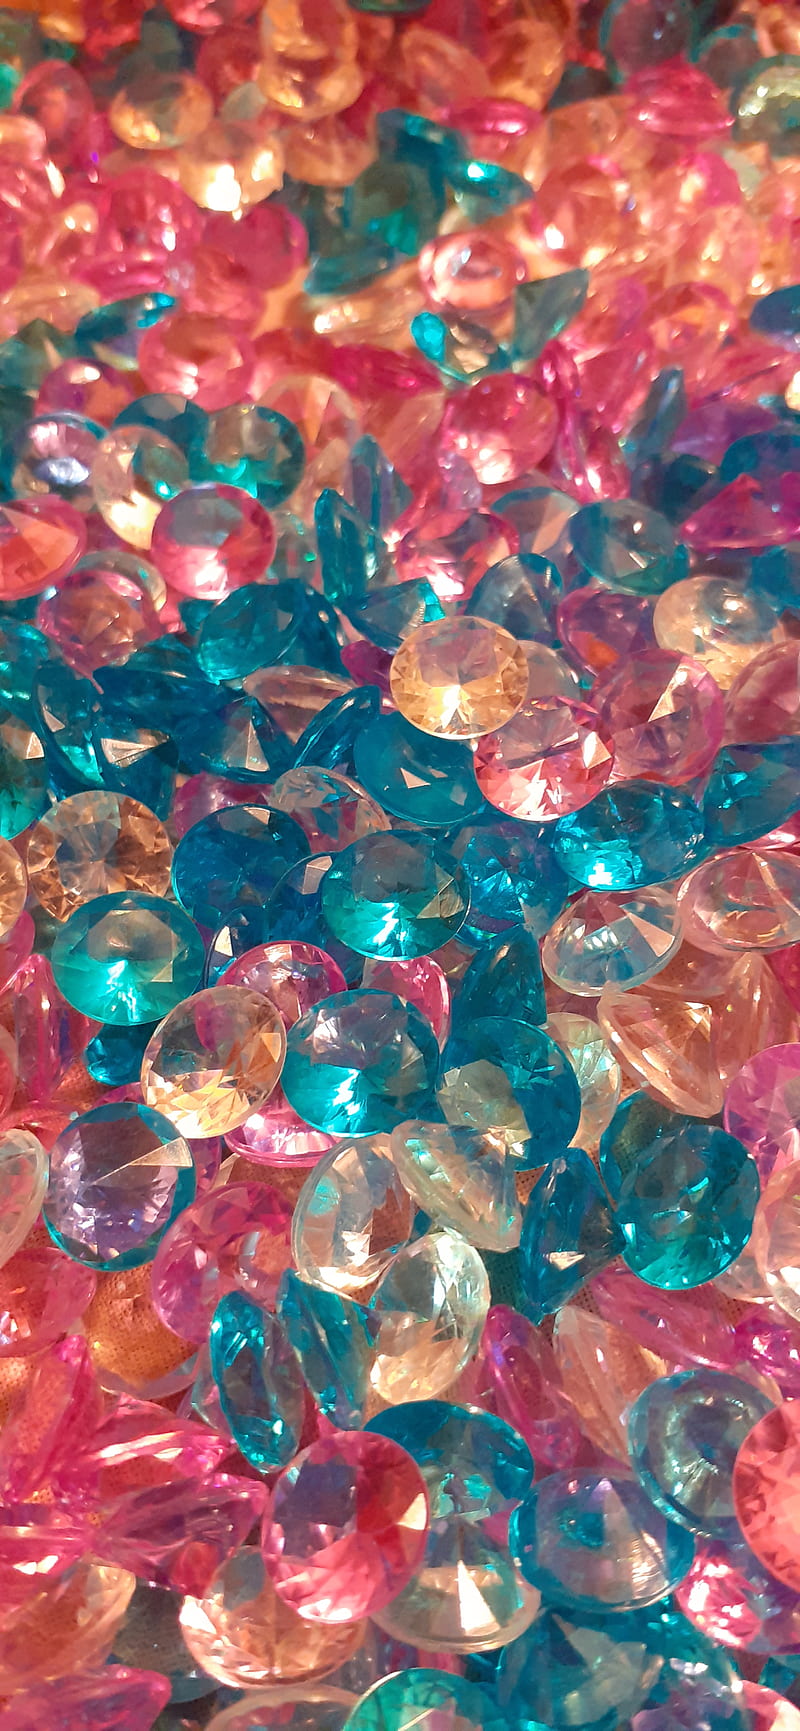 A pile of colorful plastic gems. - Diamond